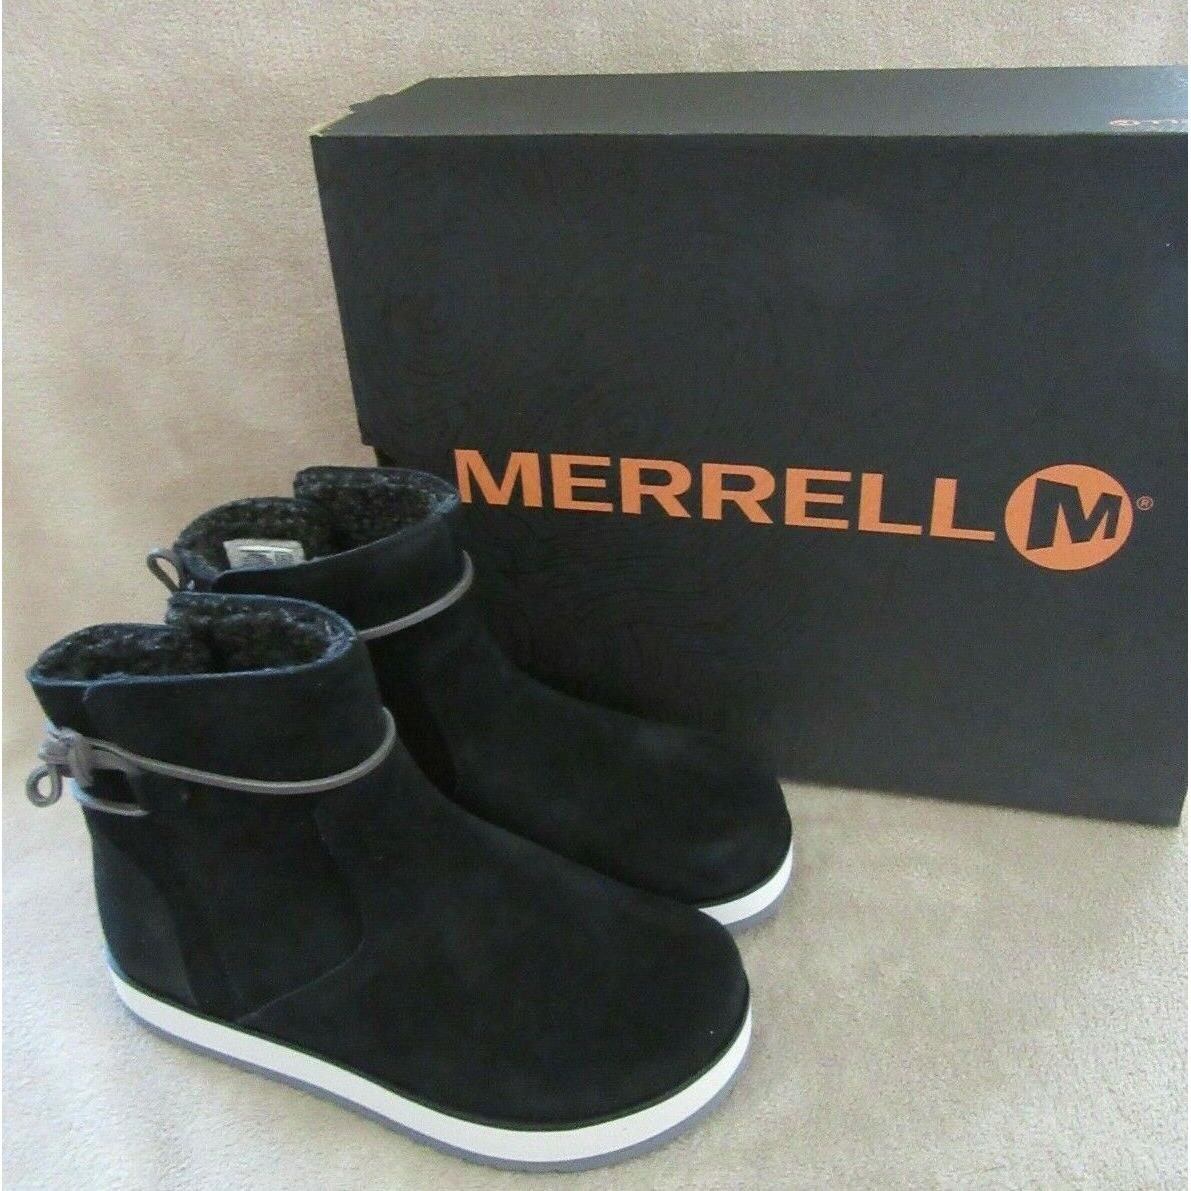 Merrell J001546 Juno Bluff Polar Waterproof Suede Boots Shoes US 8 M EU 38.5